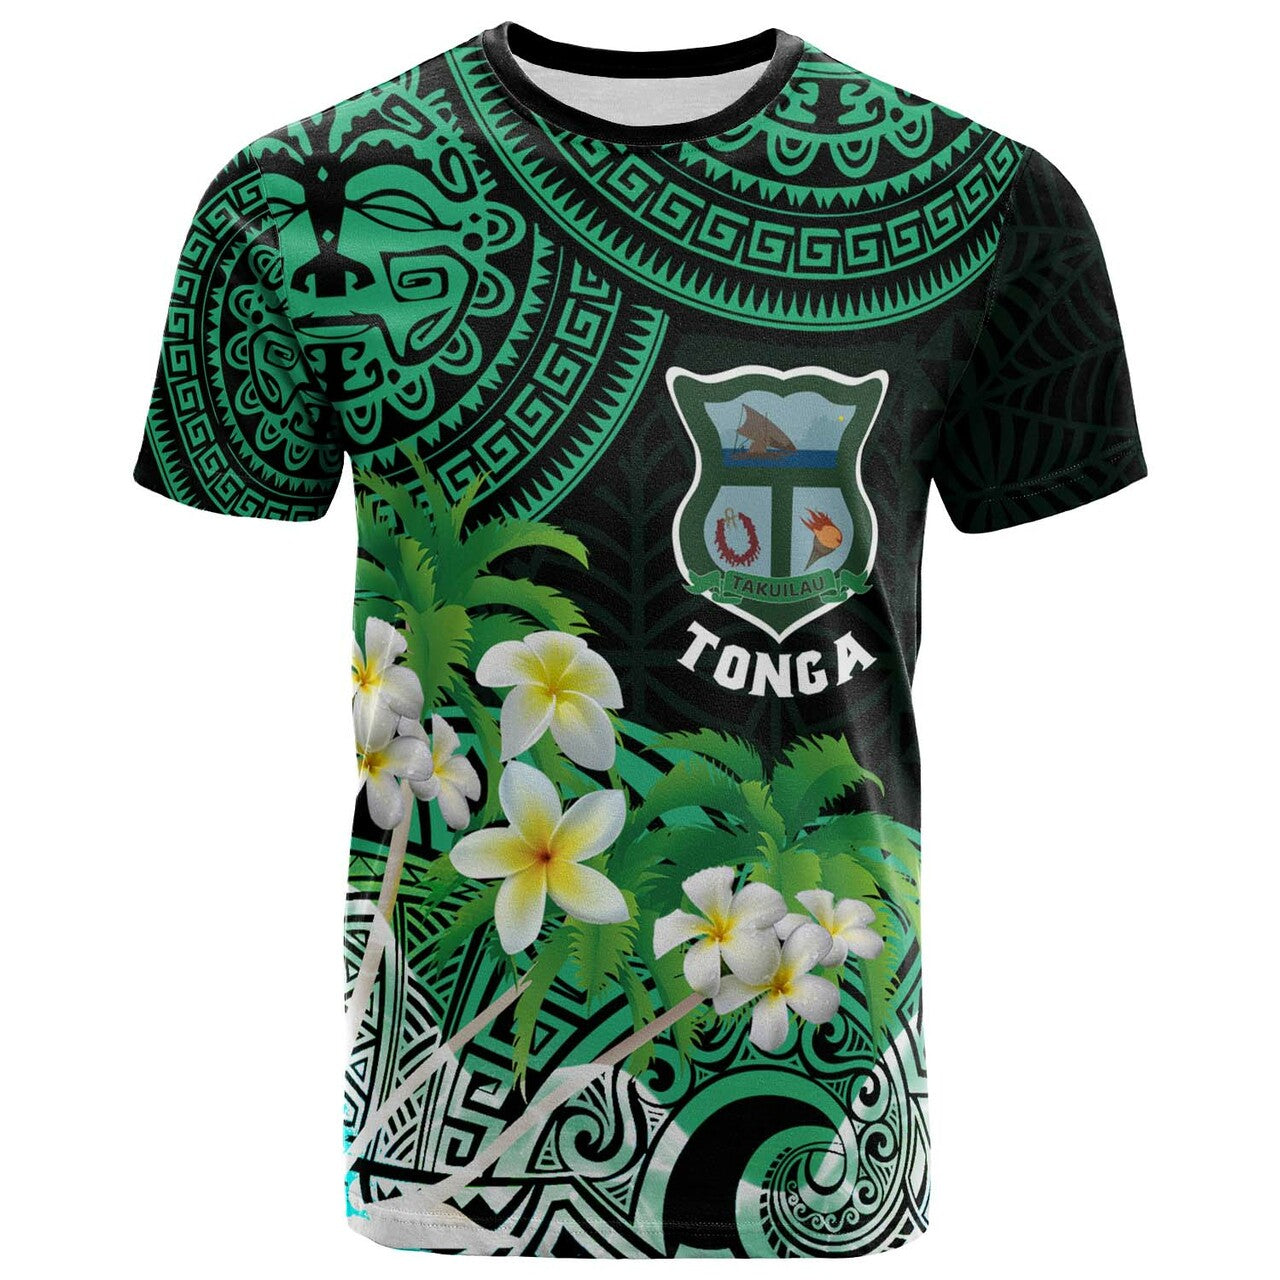 Tonga Custom T Shirt Takuilau College with Polynesian Patterns and Plumeria Flower LT10 Green - Polynesian Pride